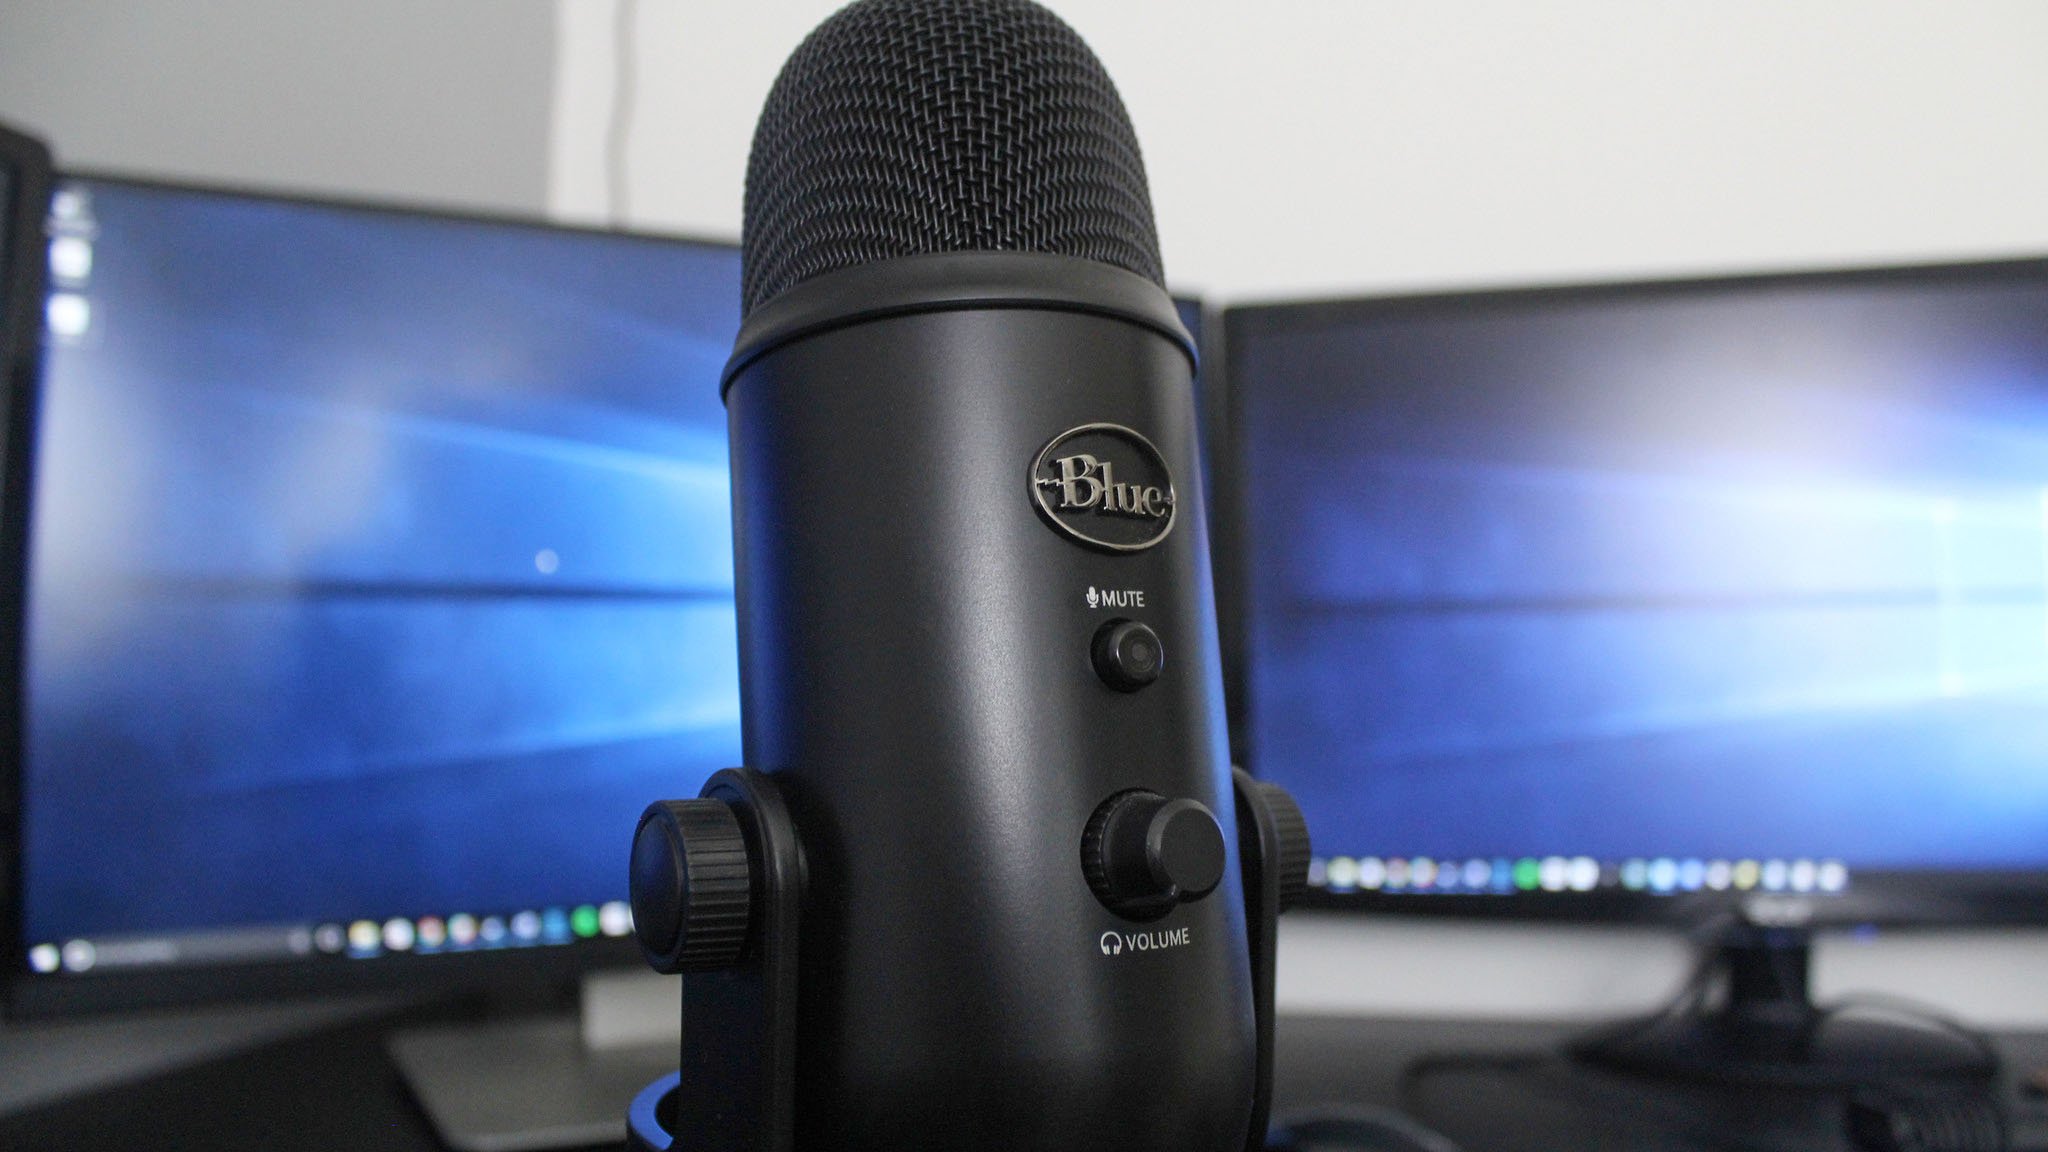 Blue Yeti microphone on sale: Save $15, get a free $50 Ubisoft